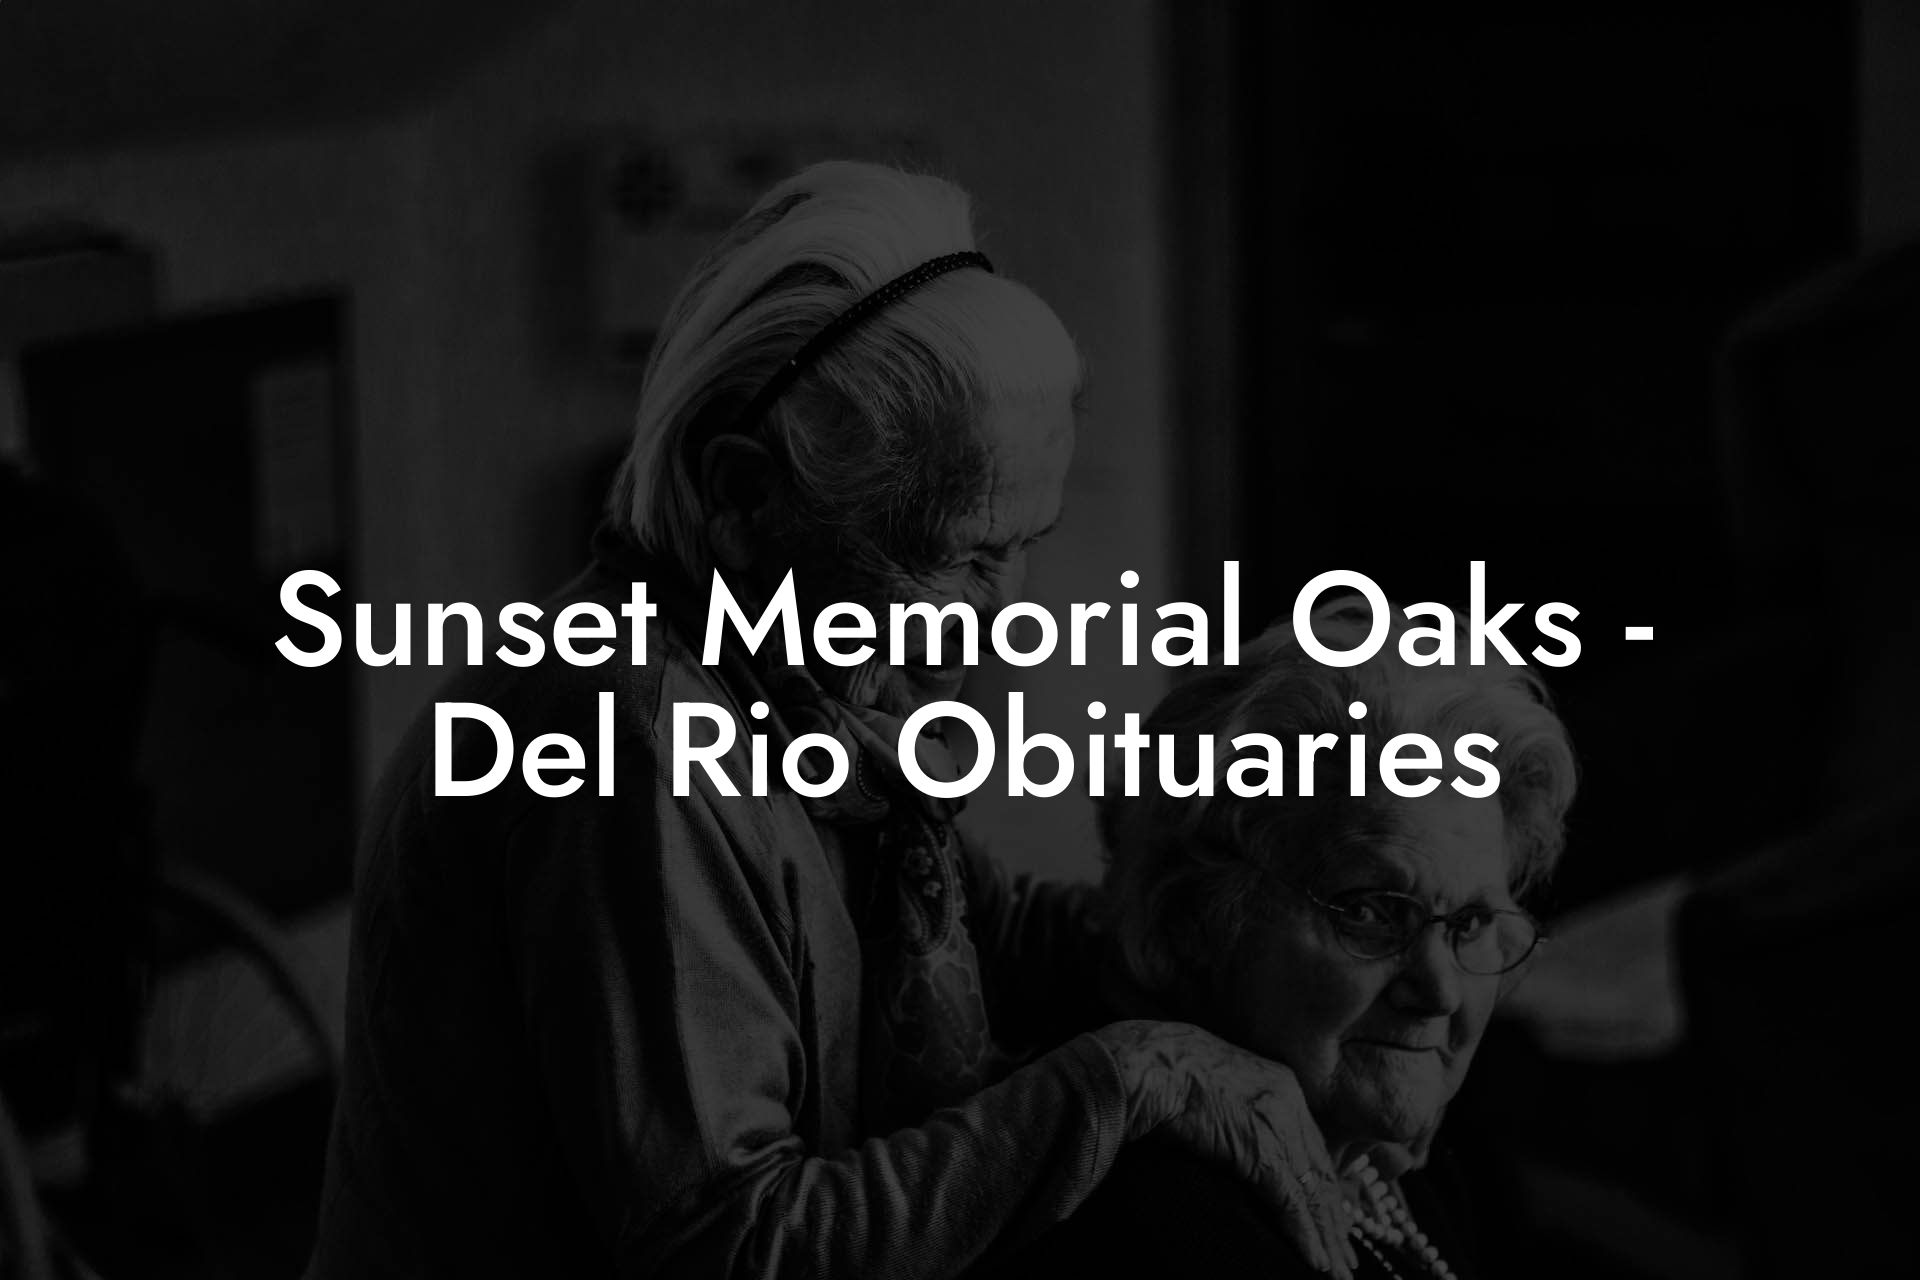 Sunset Memorial Oaks - Del Rio Obituaries